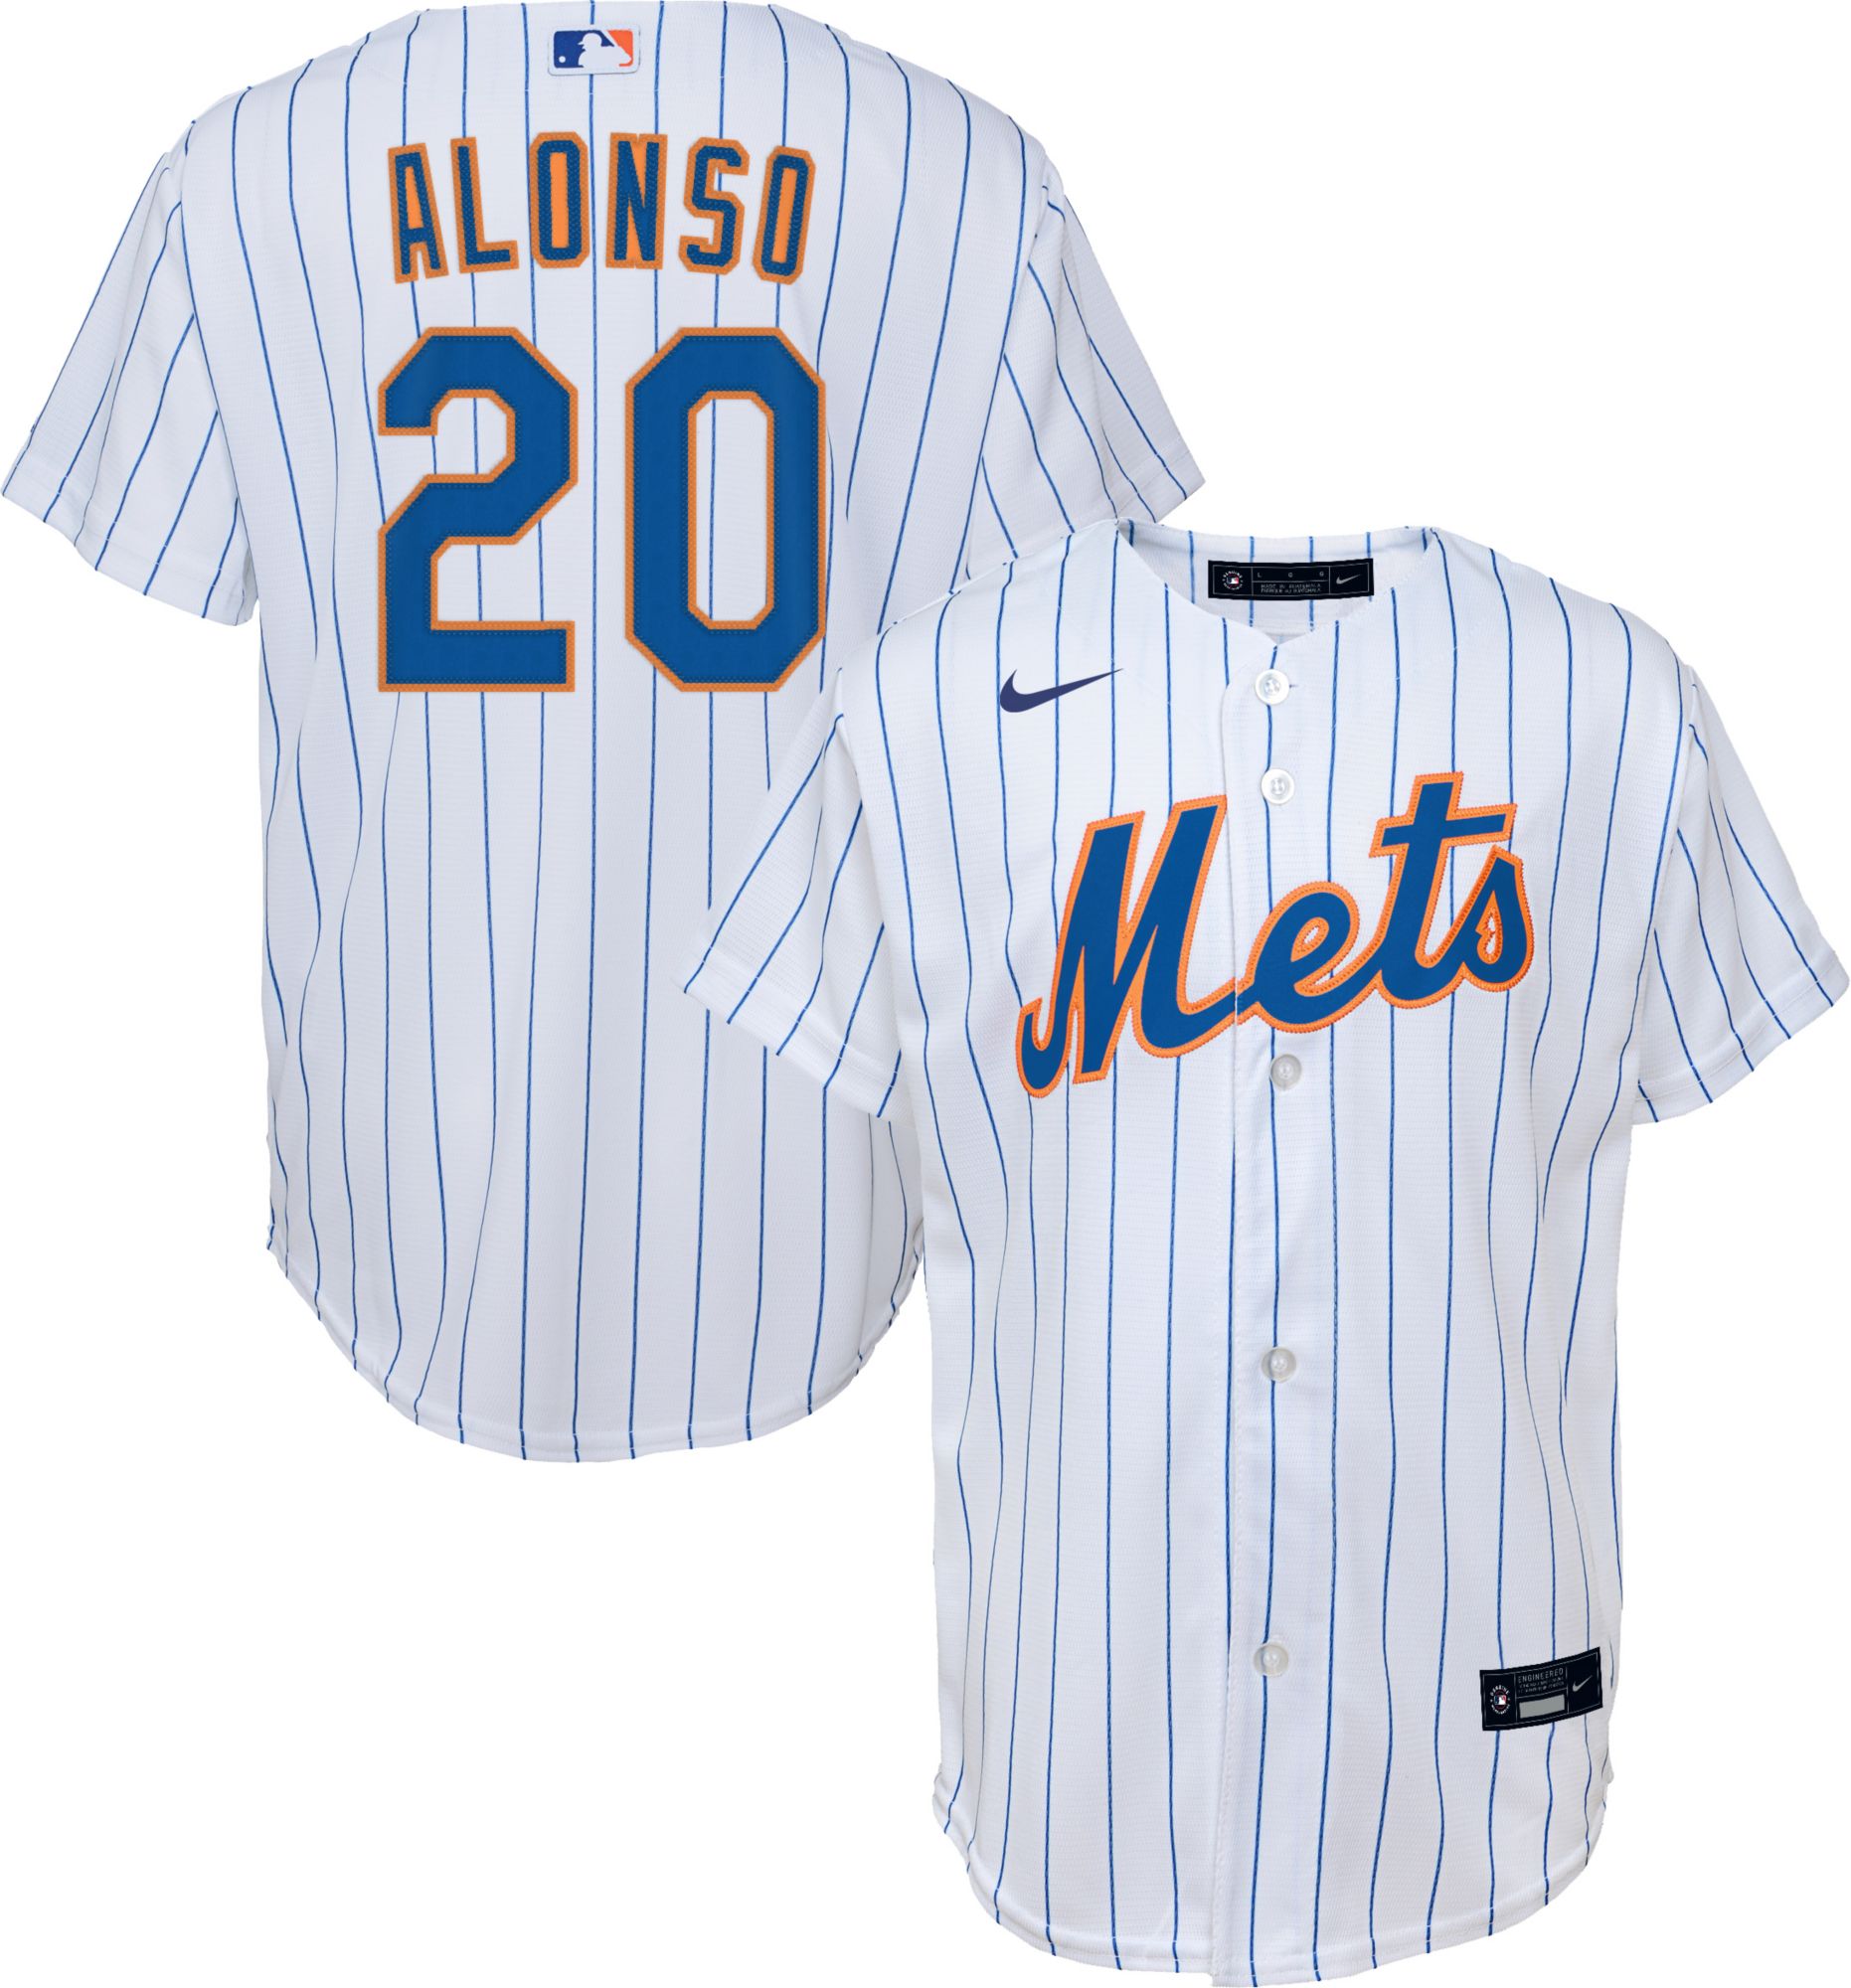 Nike Men's New York Mets Pete Alonso #20 Gray Cool Base Road